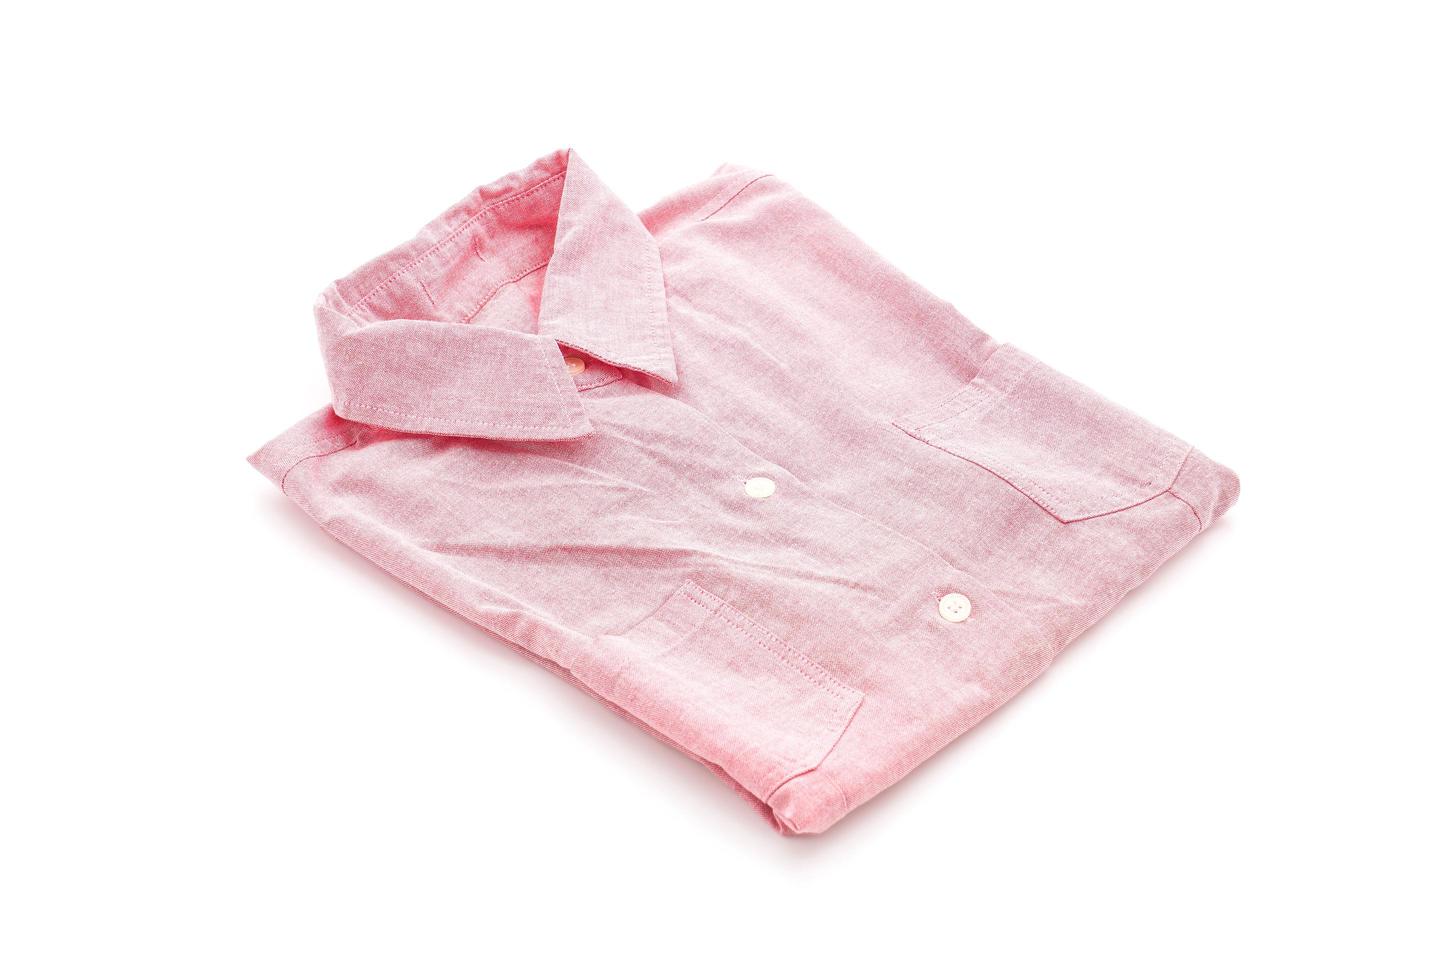 camisa rosa doblada sobre fondo blanco foto